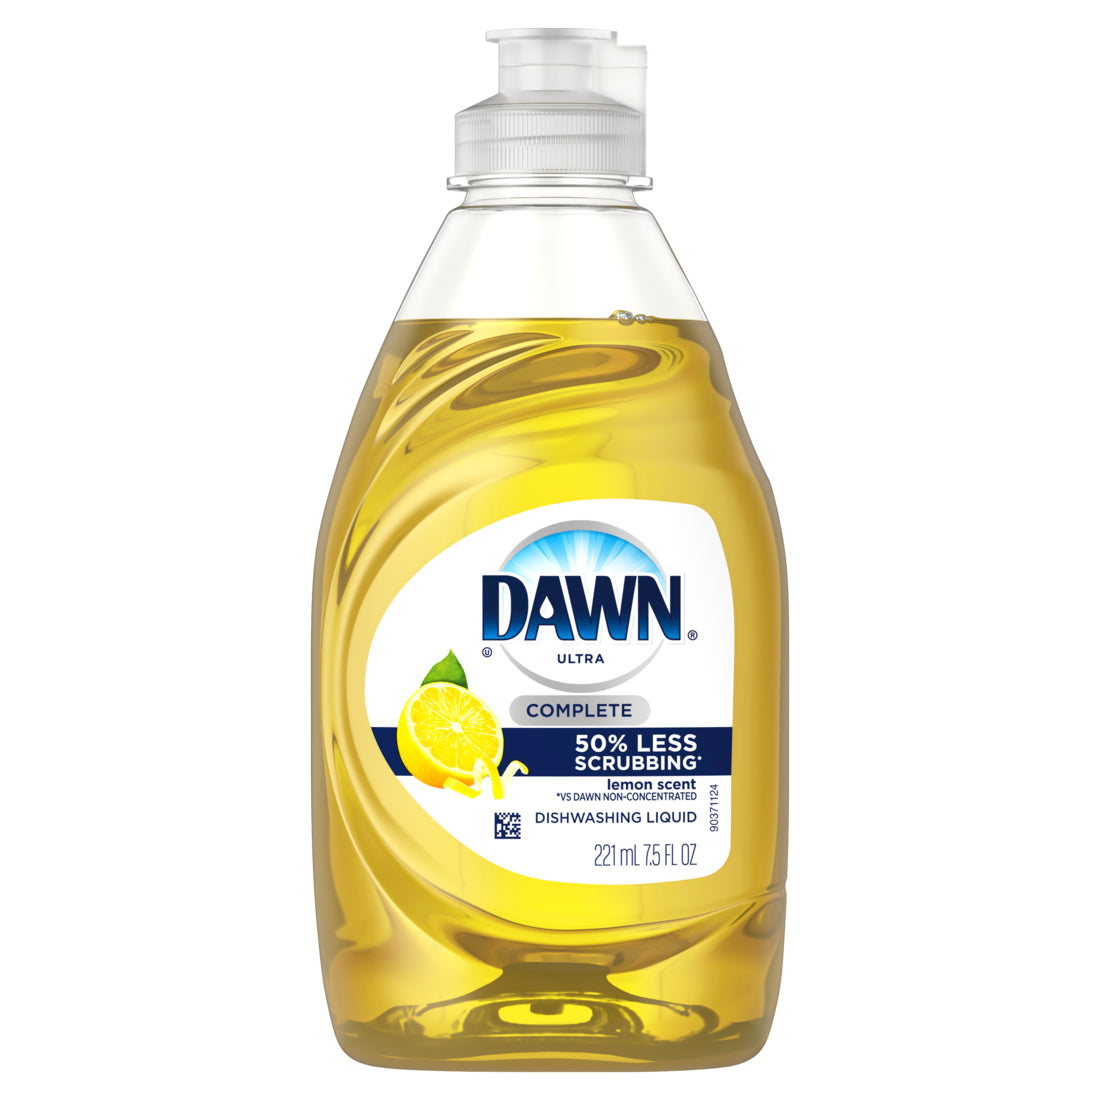 Dawn Ultra Complete Dishwashing Liquid Dish Soap Lemon Scent - 7.5oz/18pk